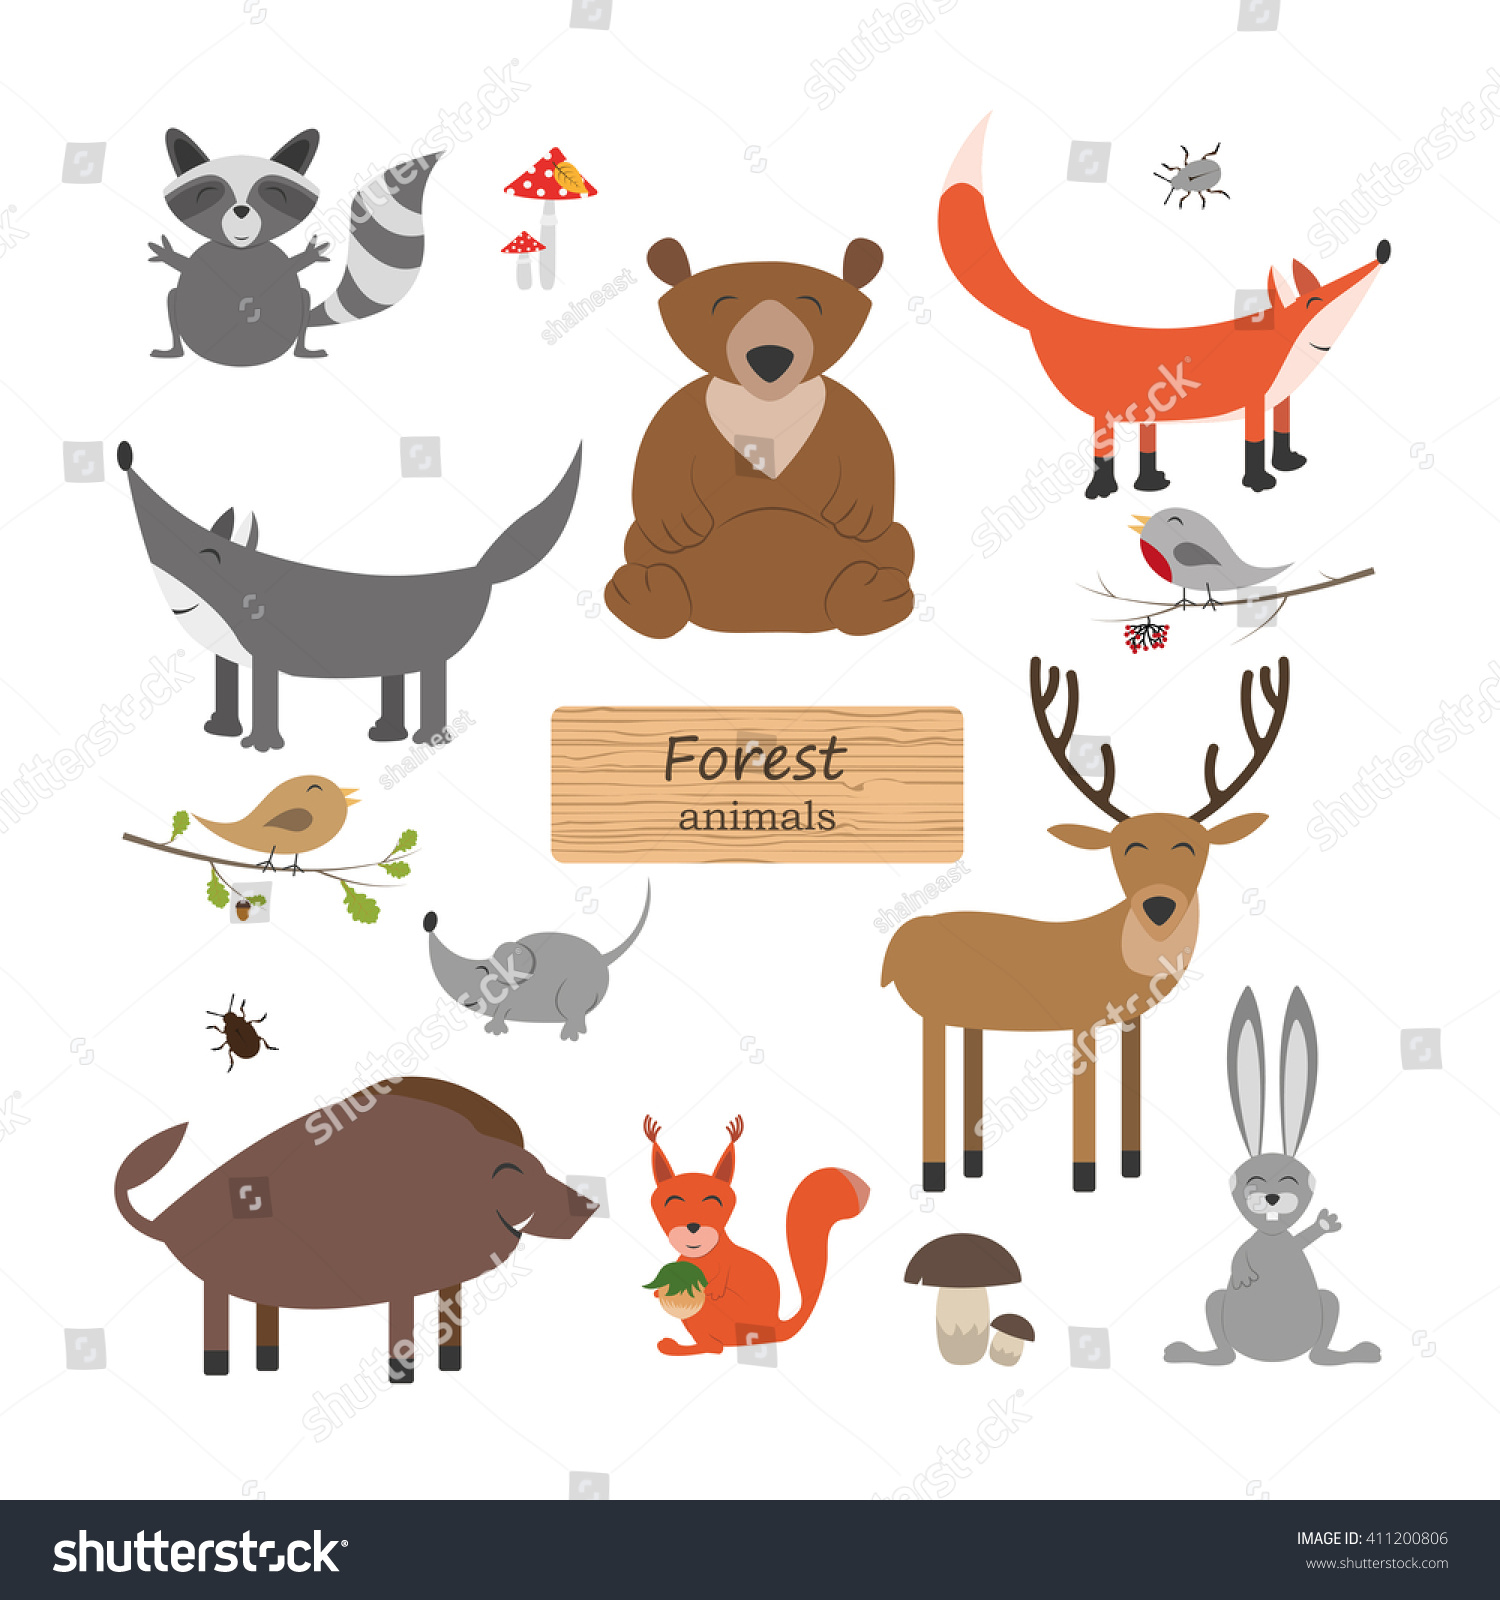 Forest Animals In Cartoon Style On White Background. Forest Animals Set ...